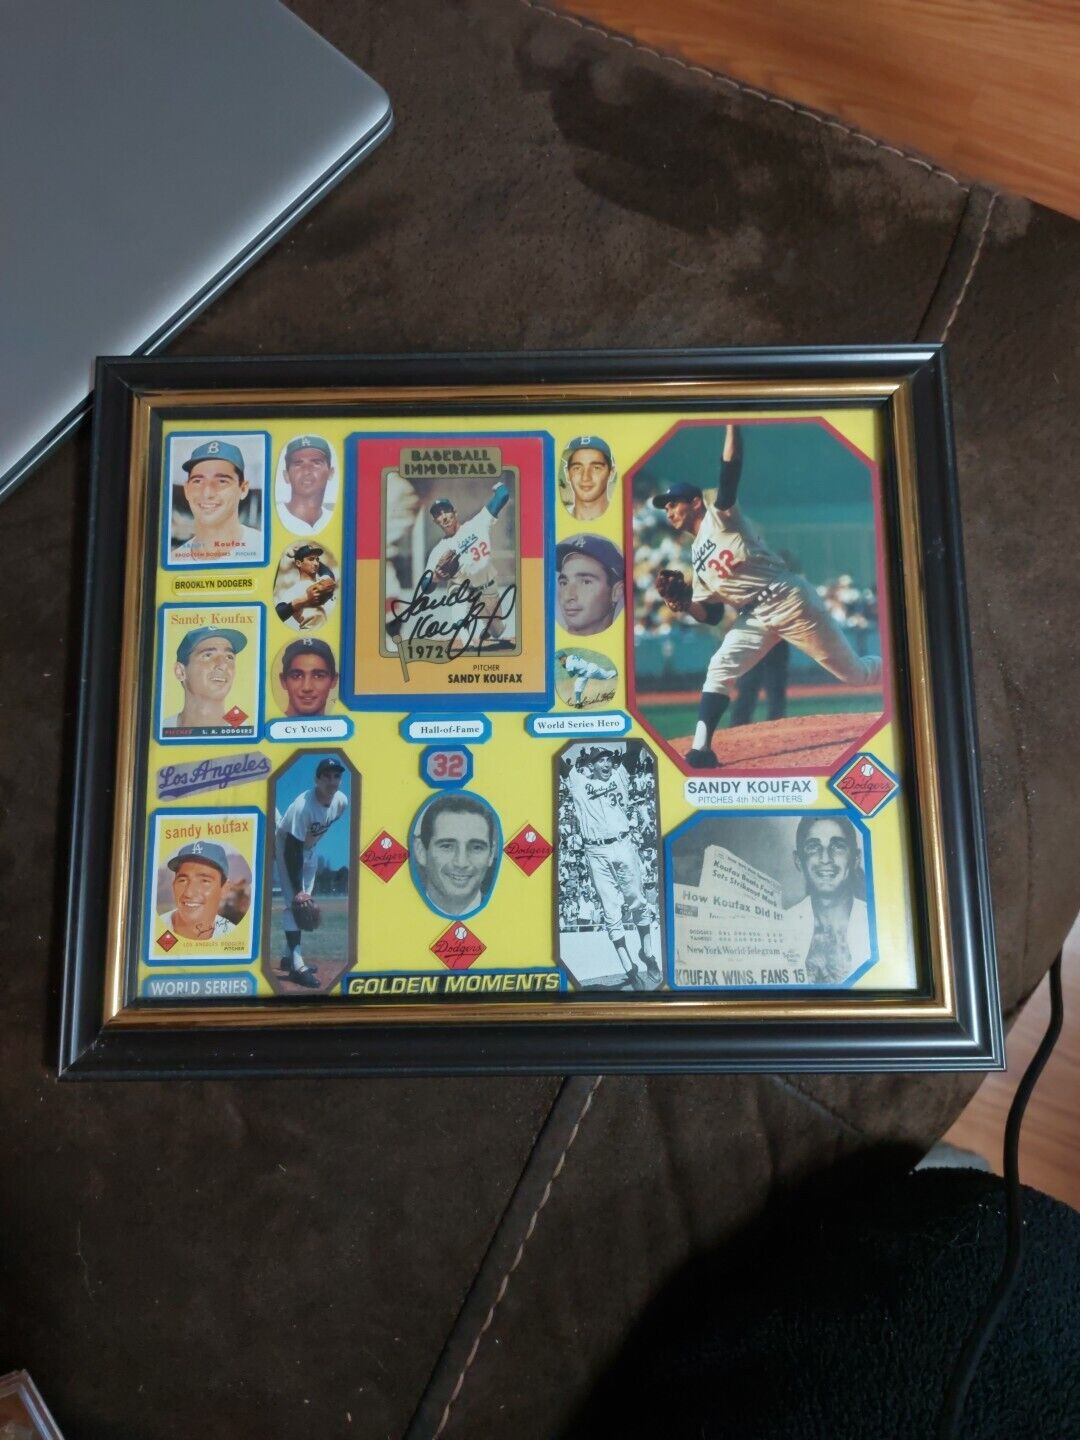 Sandy Koufax HOF Autographed Baseball Immortals Card #131 DODGERS Framed Collage